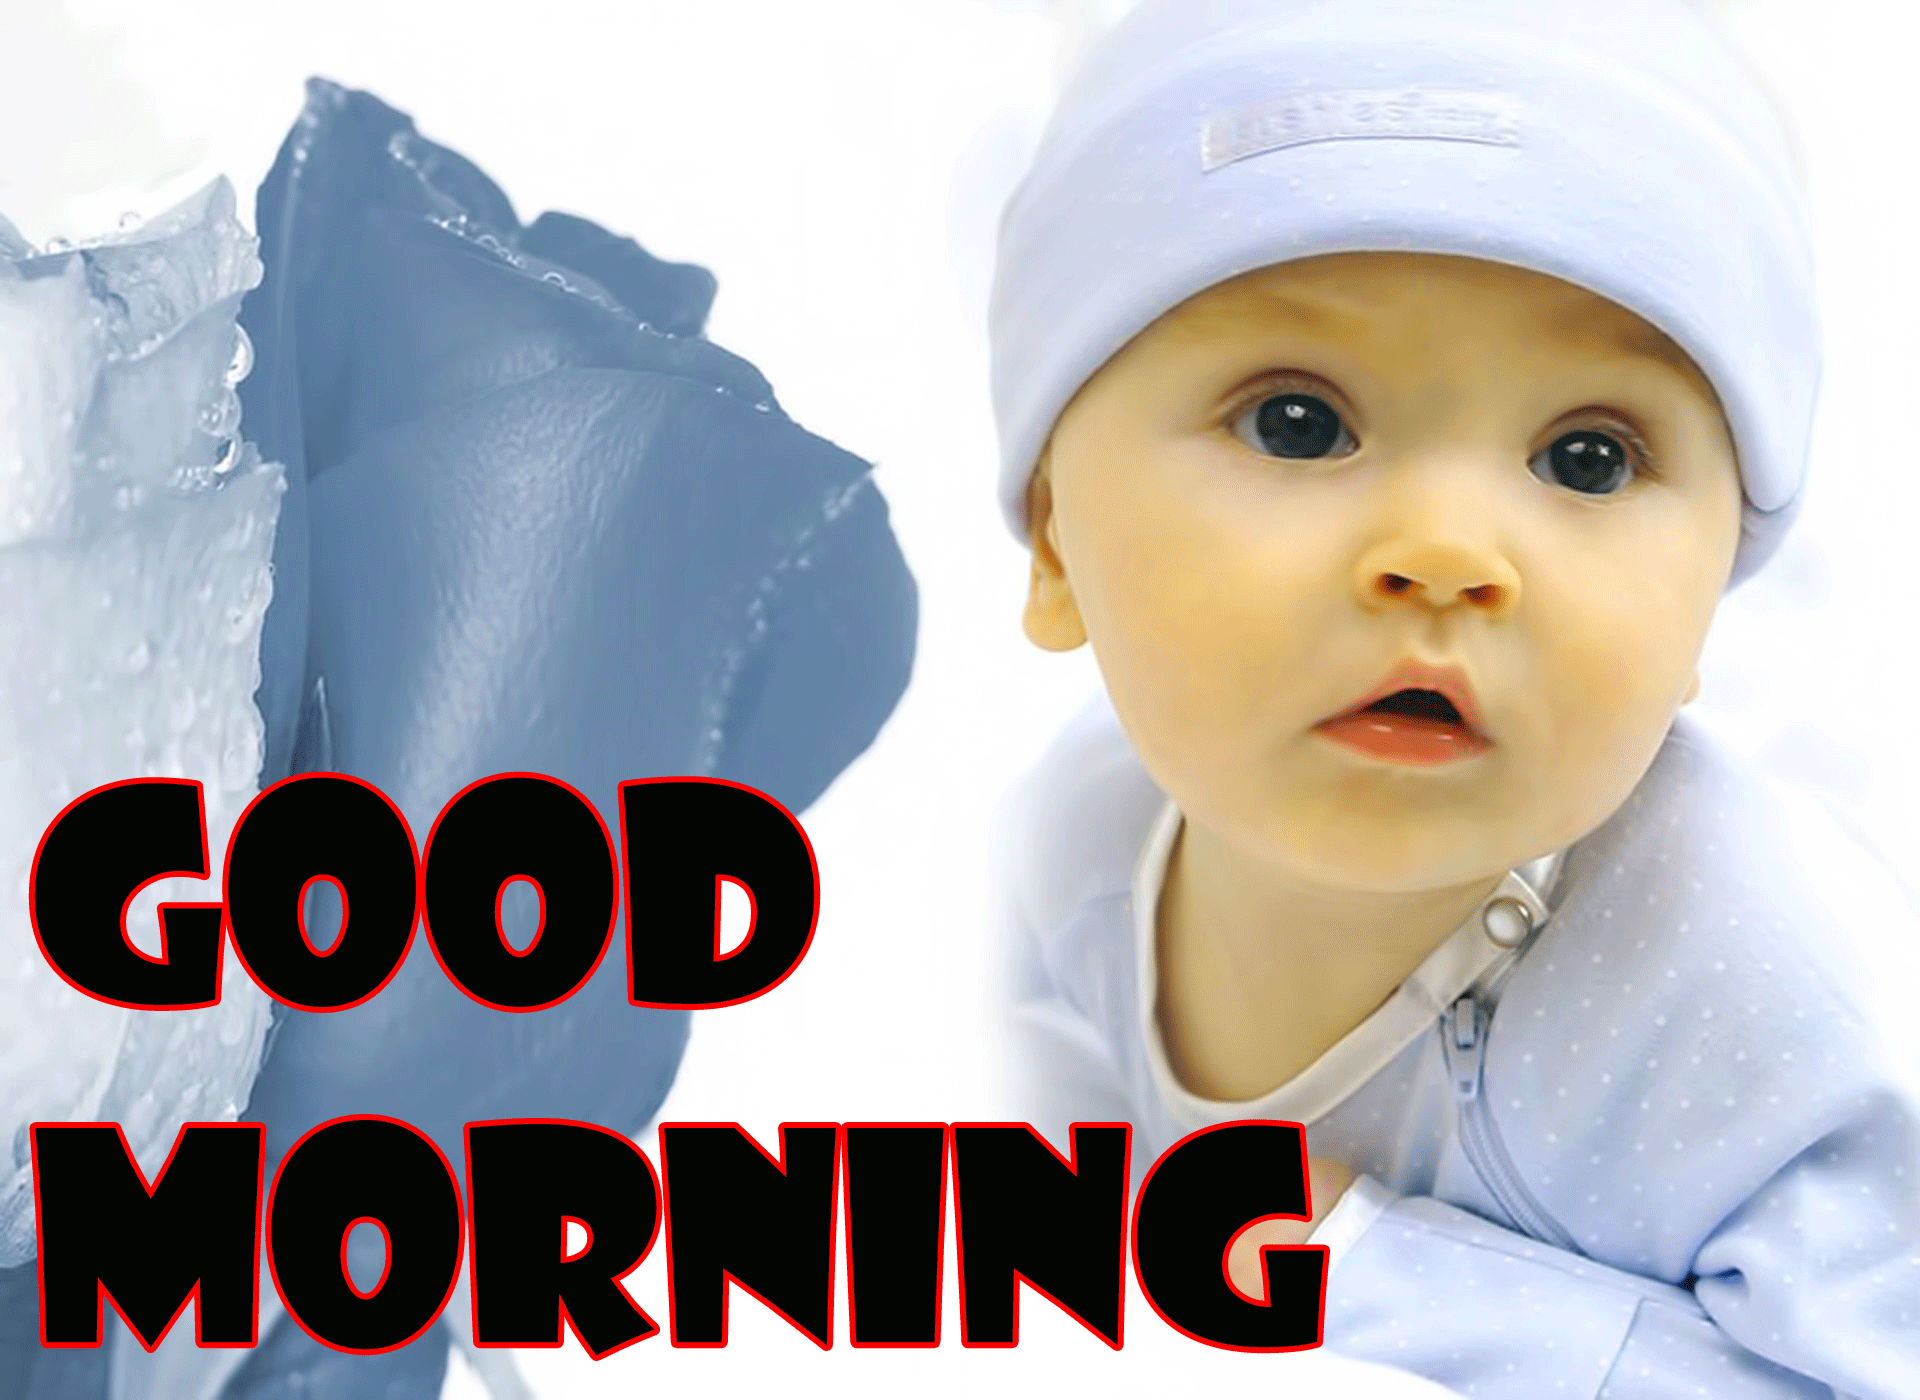 Cute Baby Good Morning Wallpaper